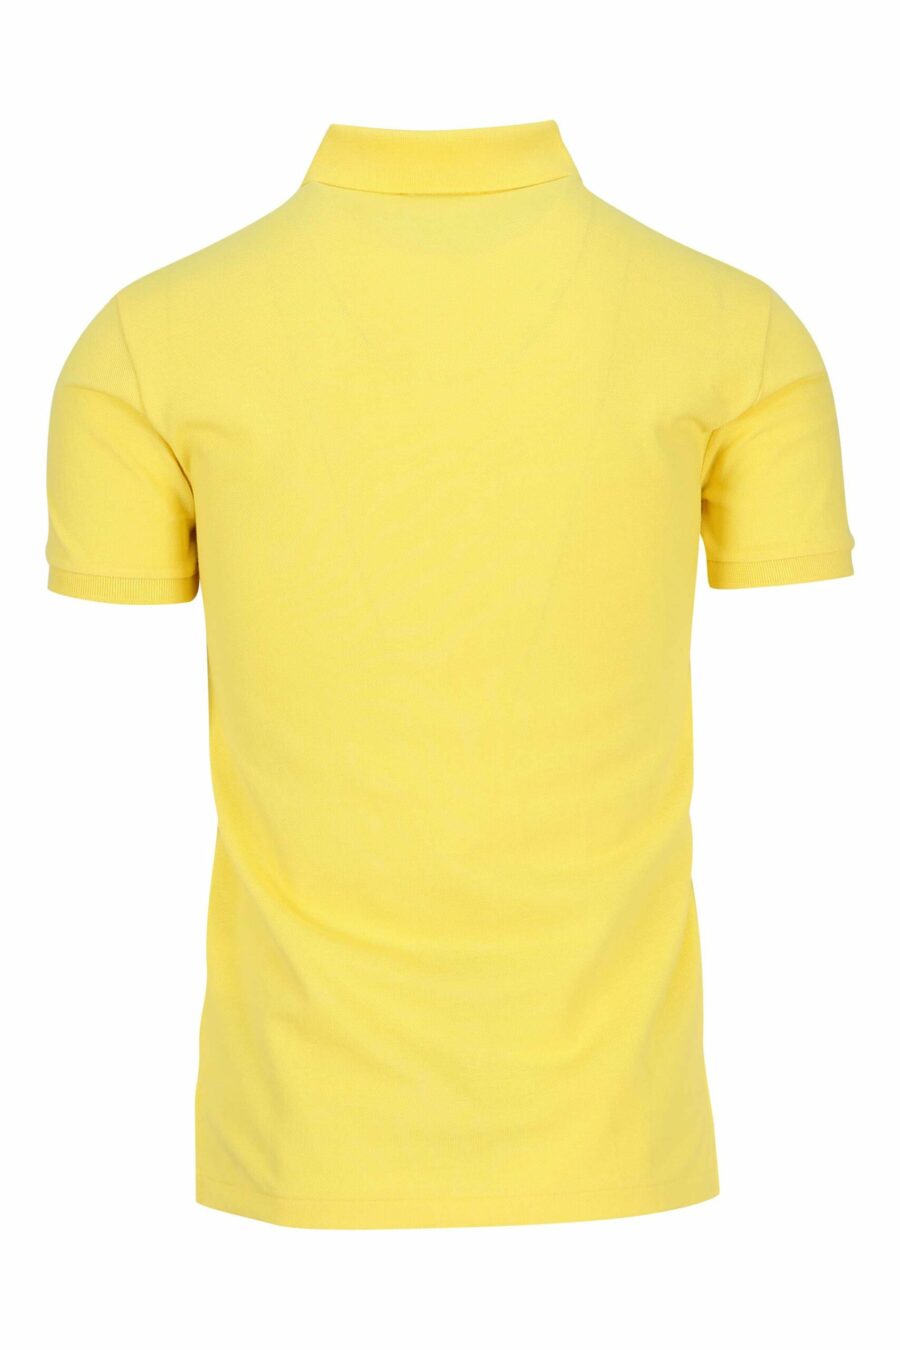 Camiseta amarilla y azul con minilogo "polo" - 3616535972186 1 scaled